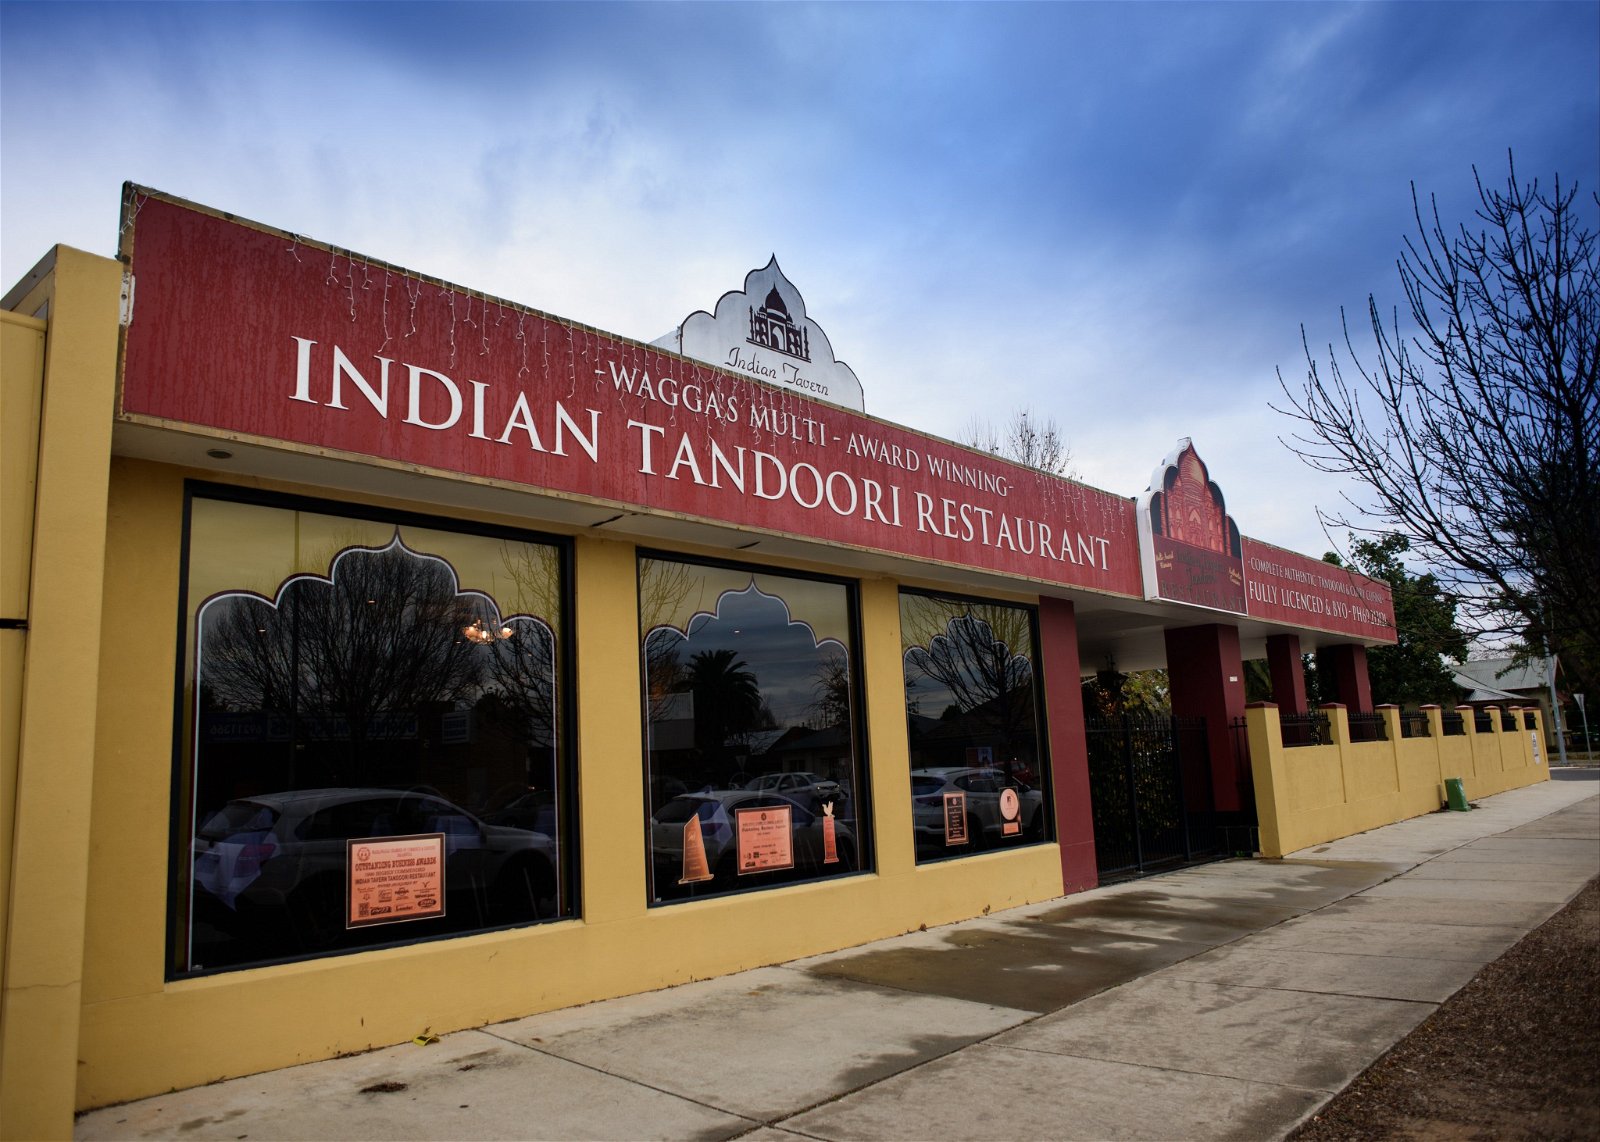 Indian Tavern Tandoori - Broome Tourism